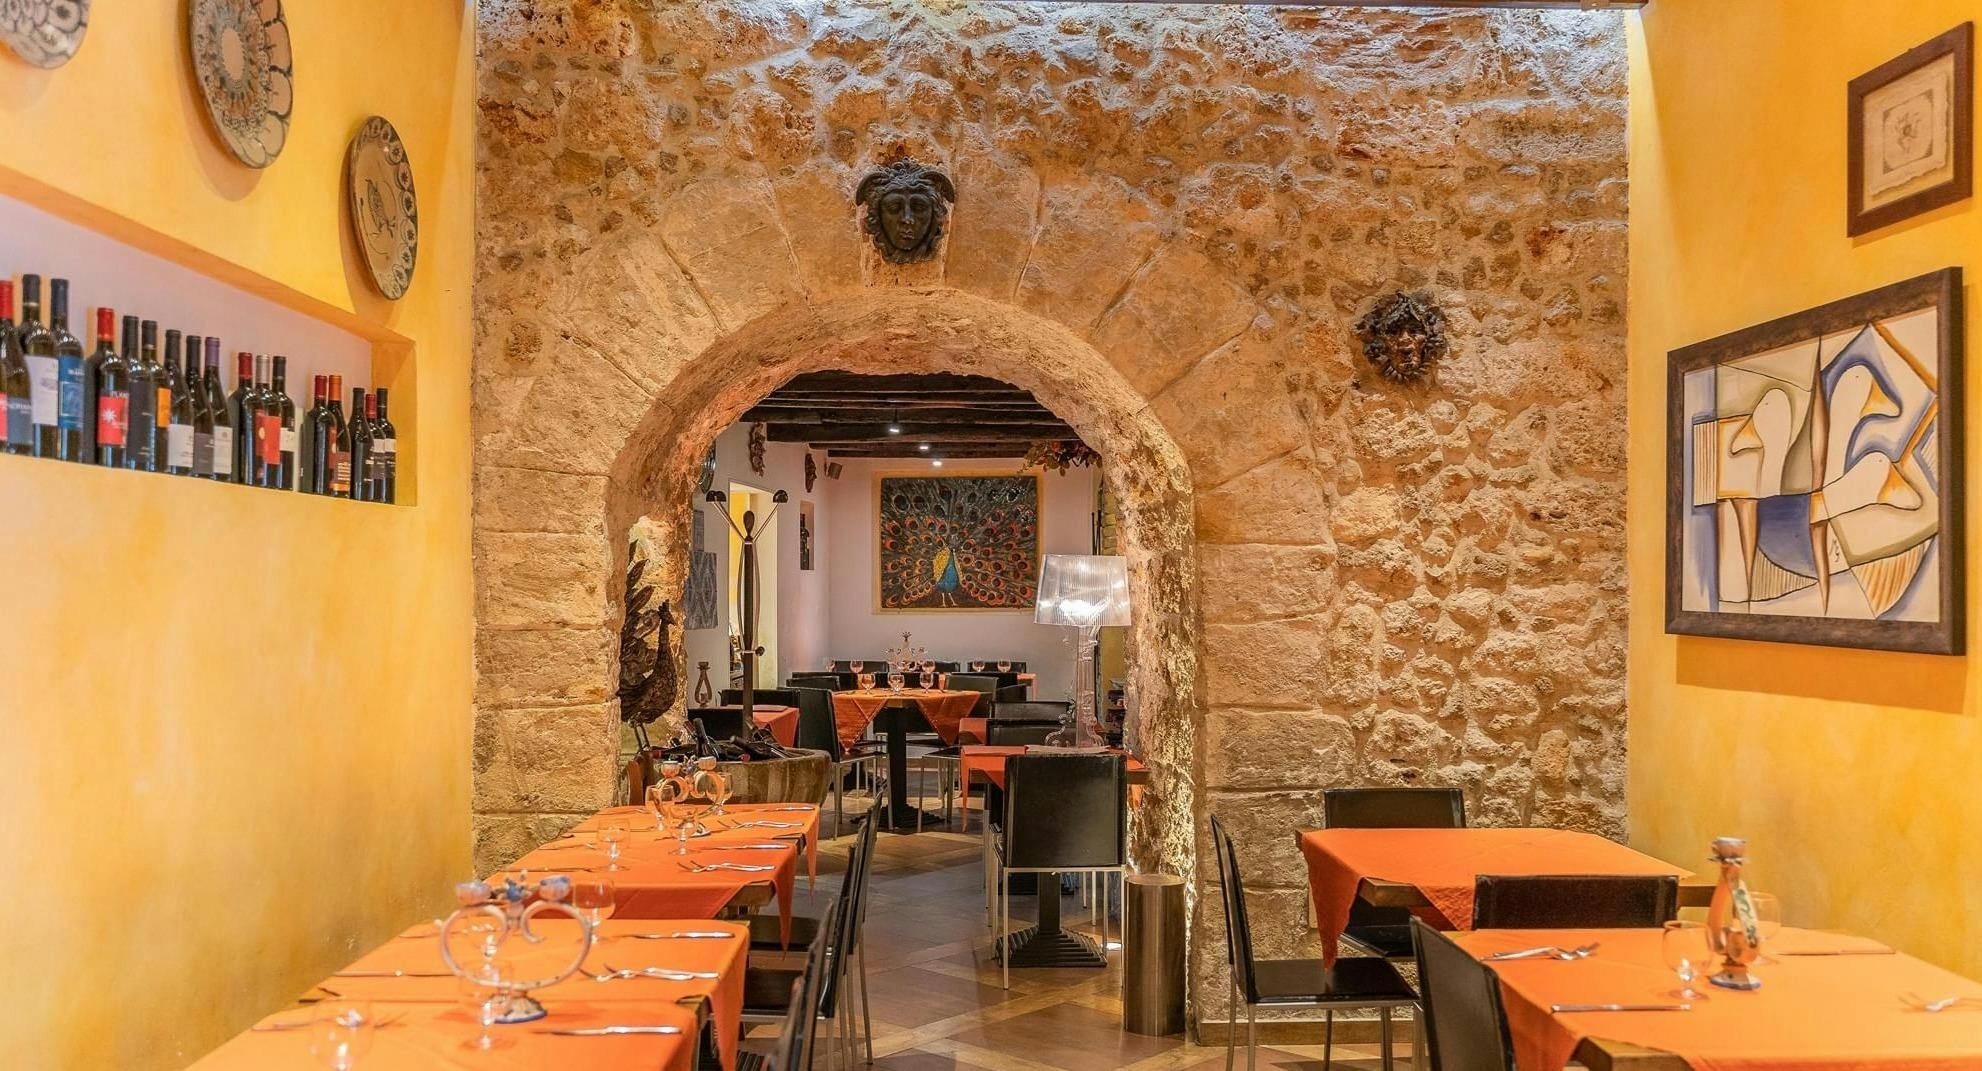 Photo of restaurant Taverna del Pavone in Monreale, Palermo